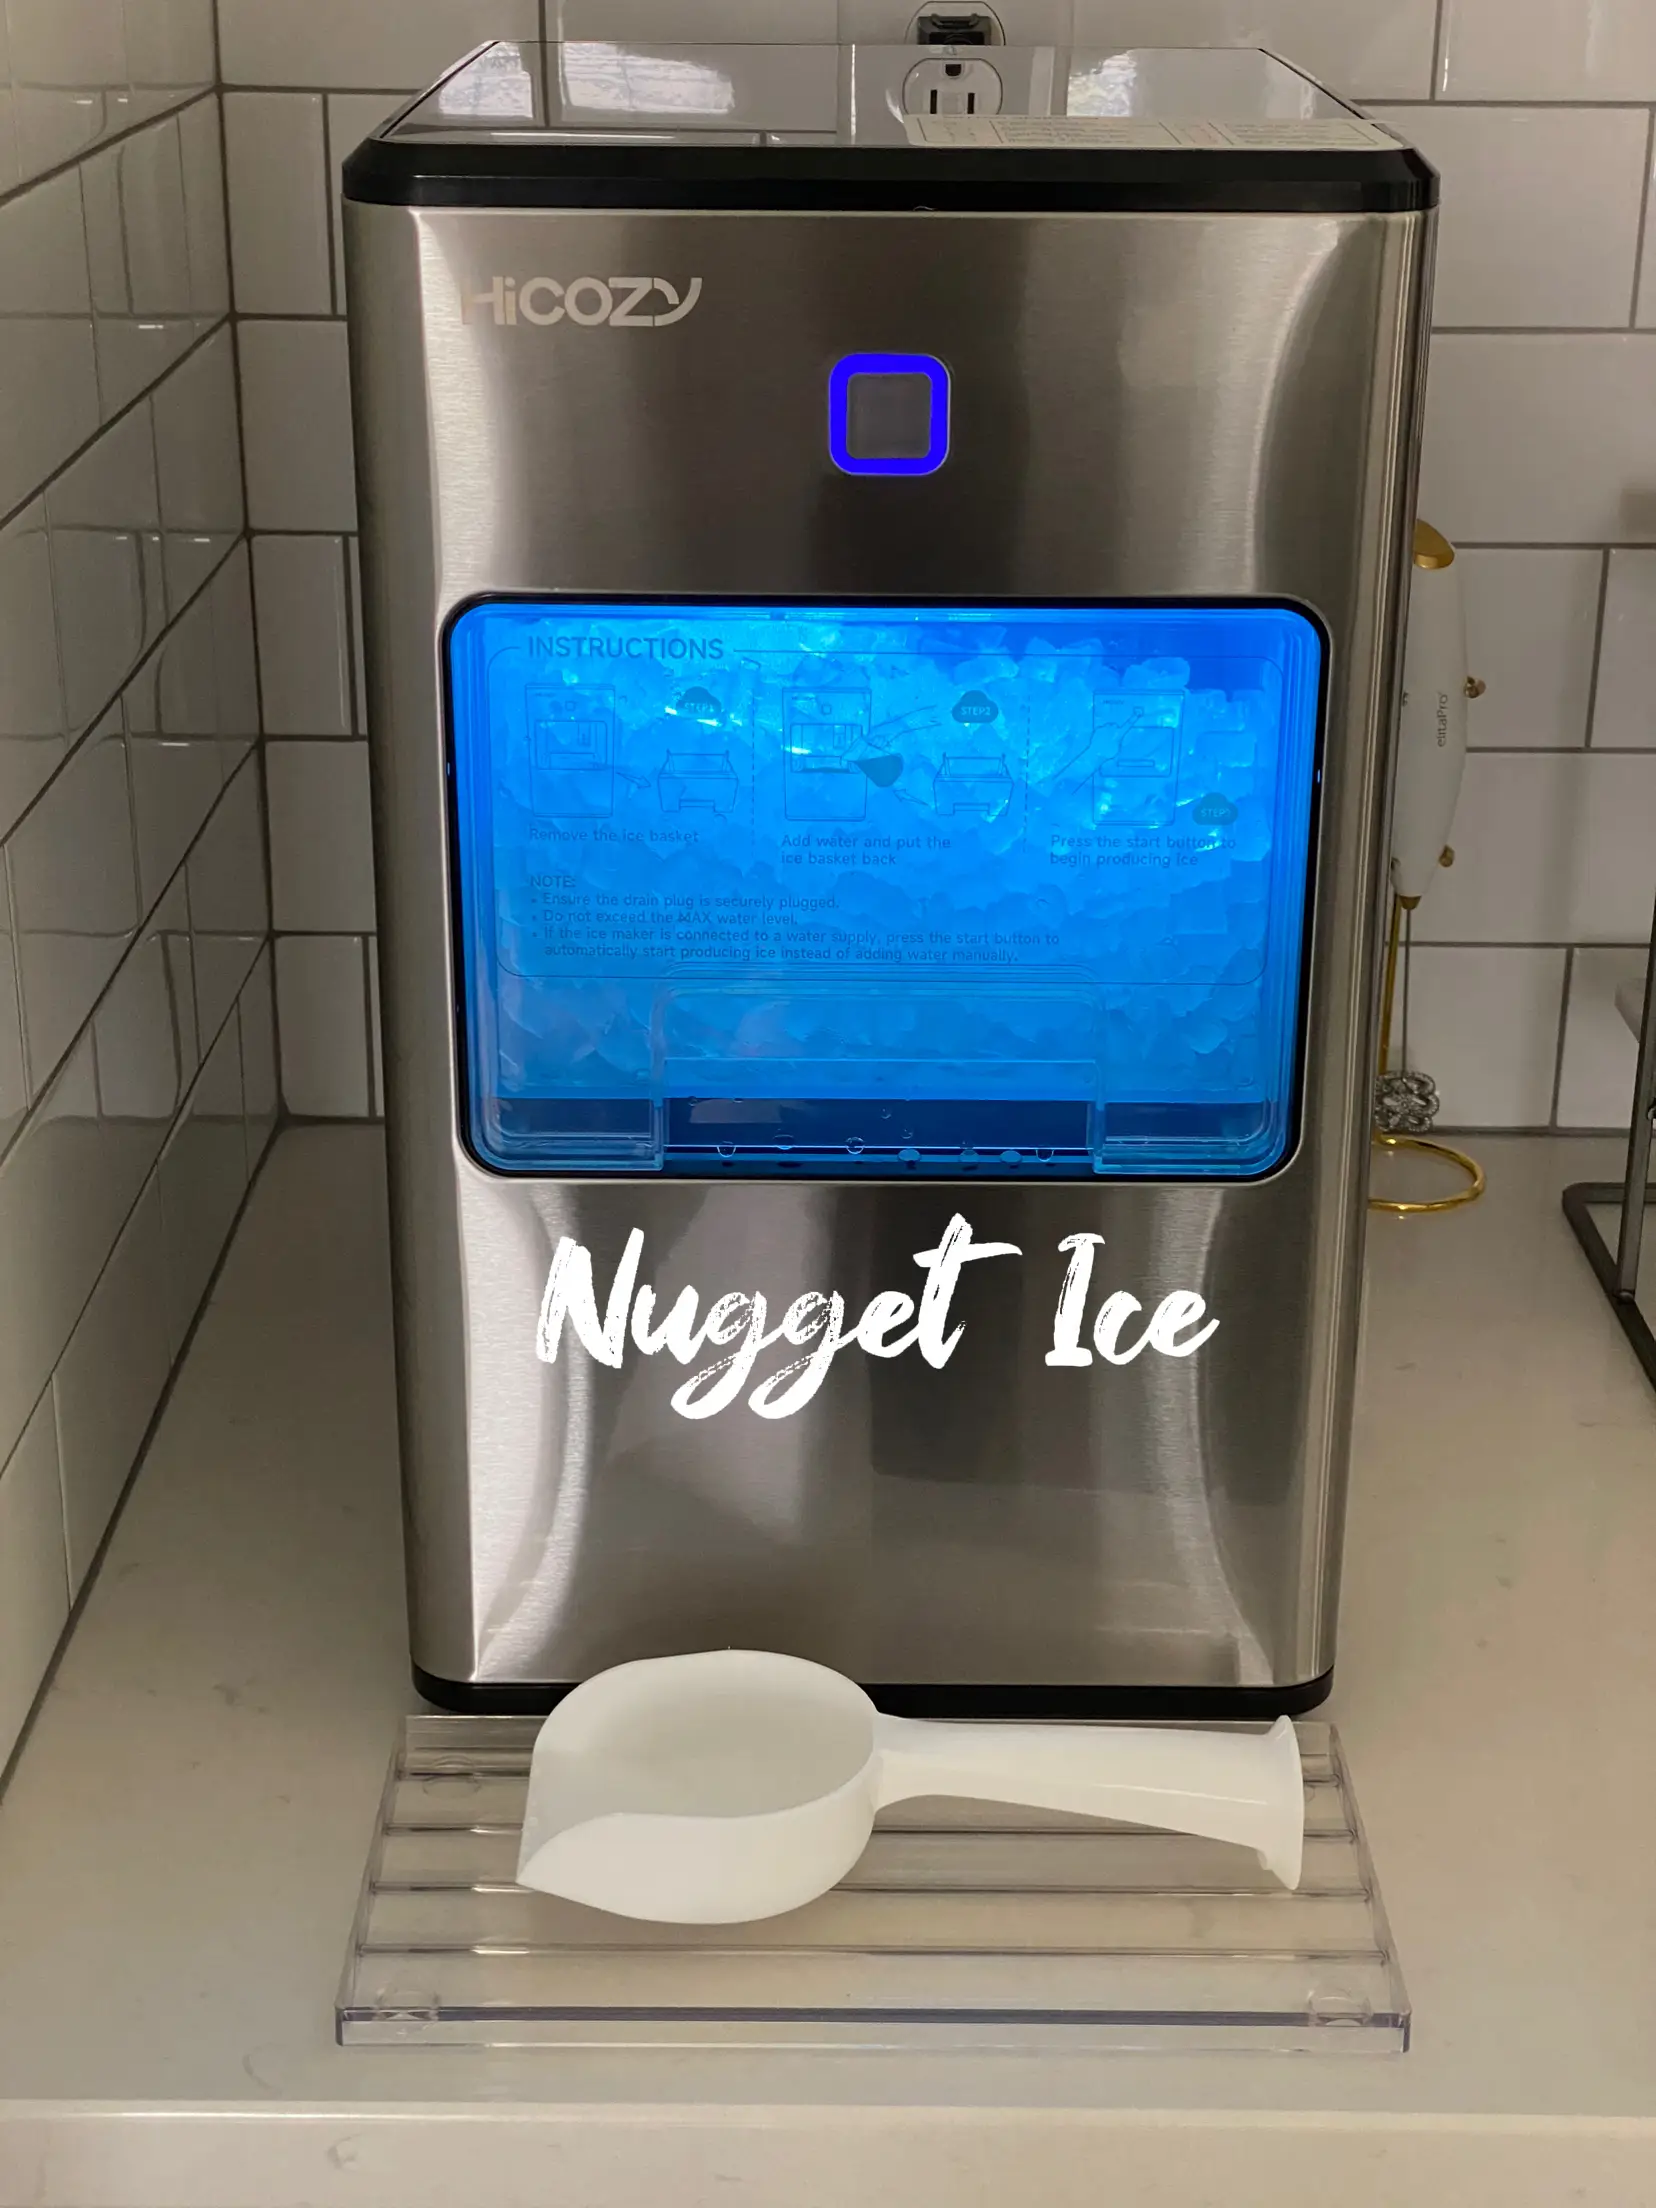  Gevi Household Ice Maker Machine : Appliances